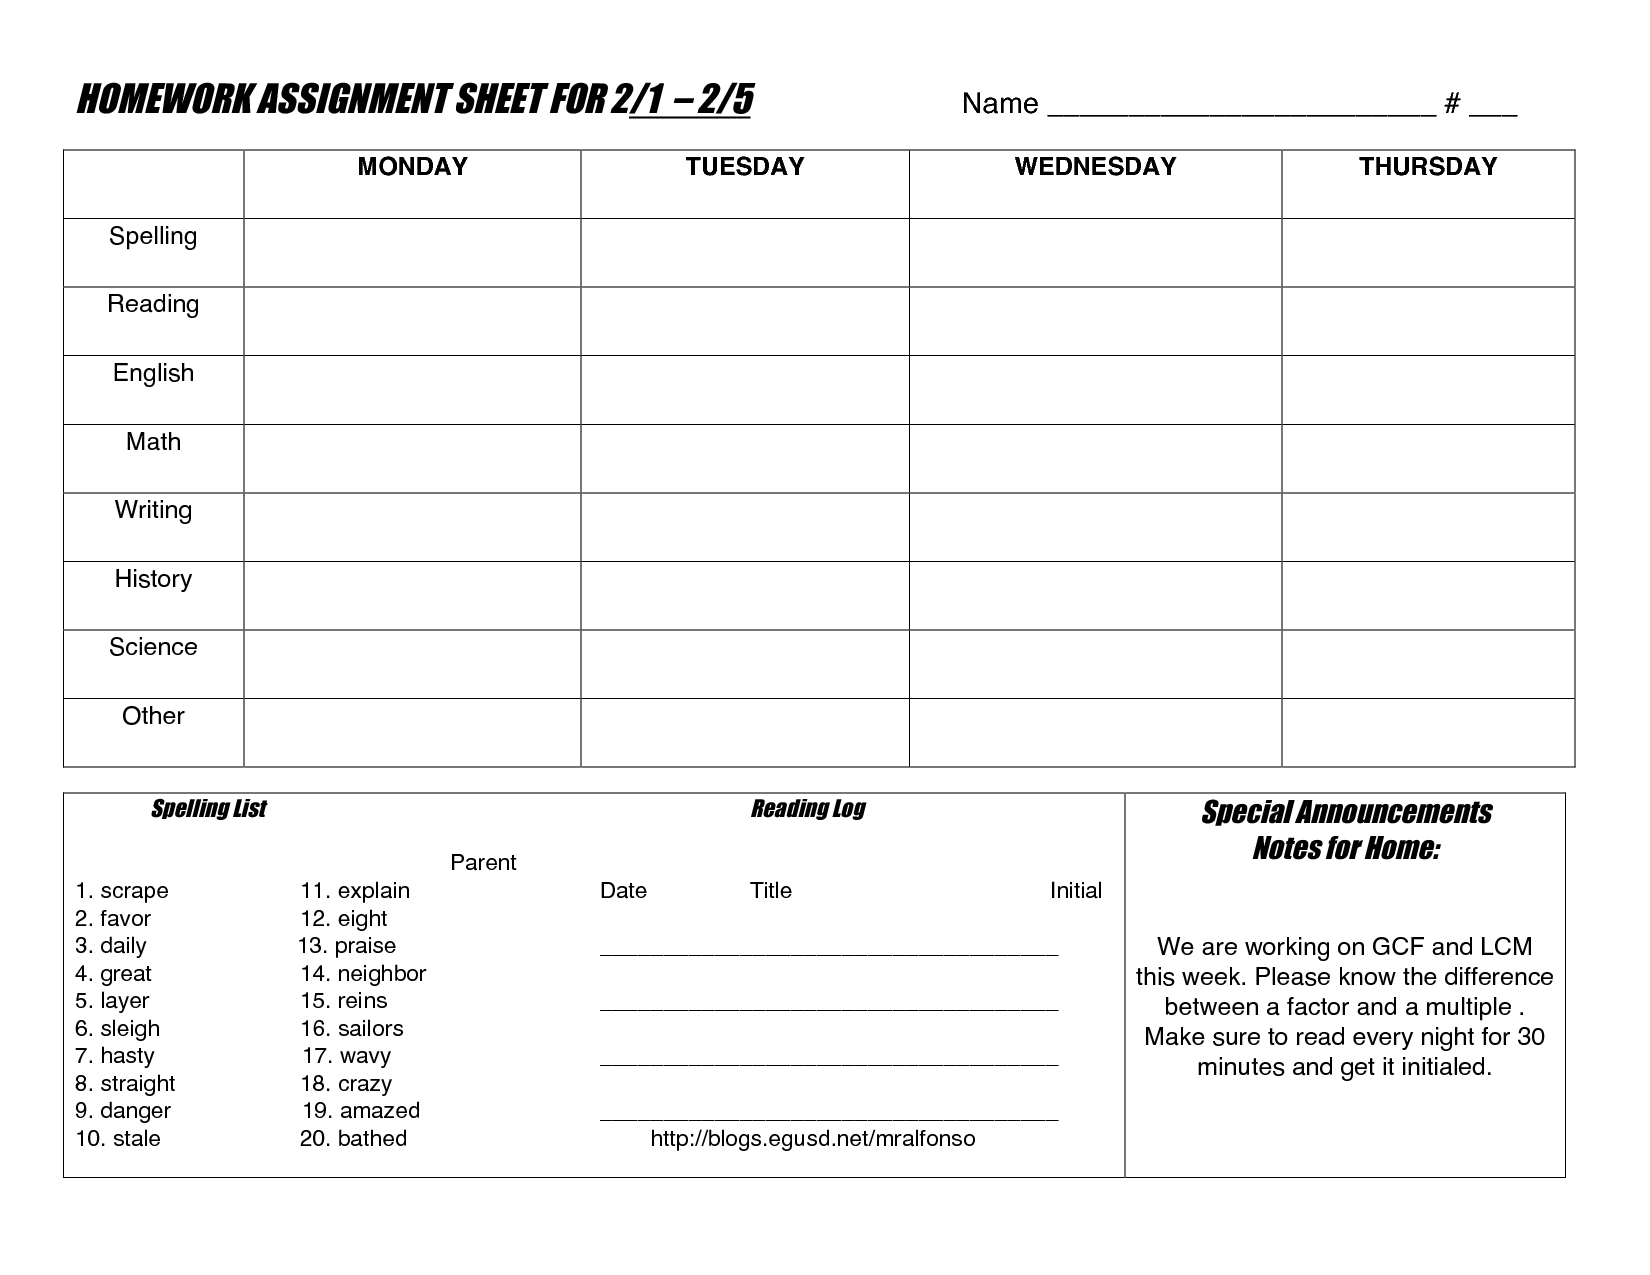 Homework Worksheet Templates For Teachers | Printable For Nursing Assistant Report Sheet Templates